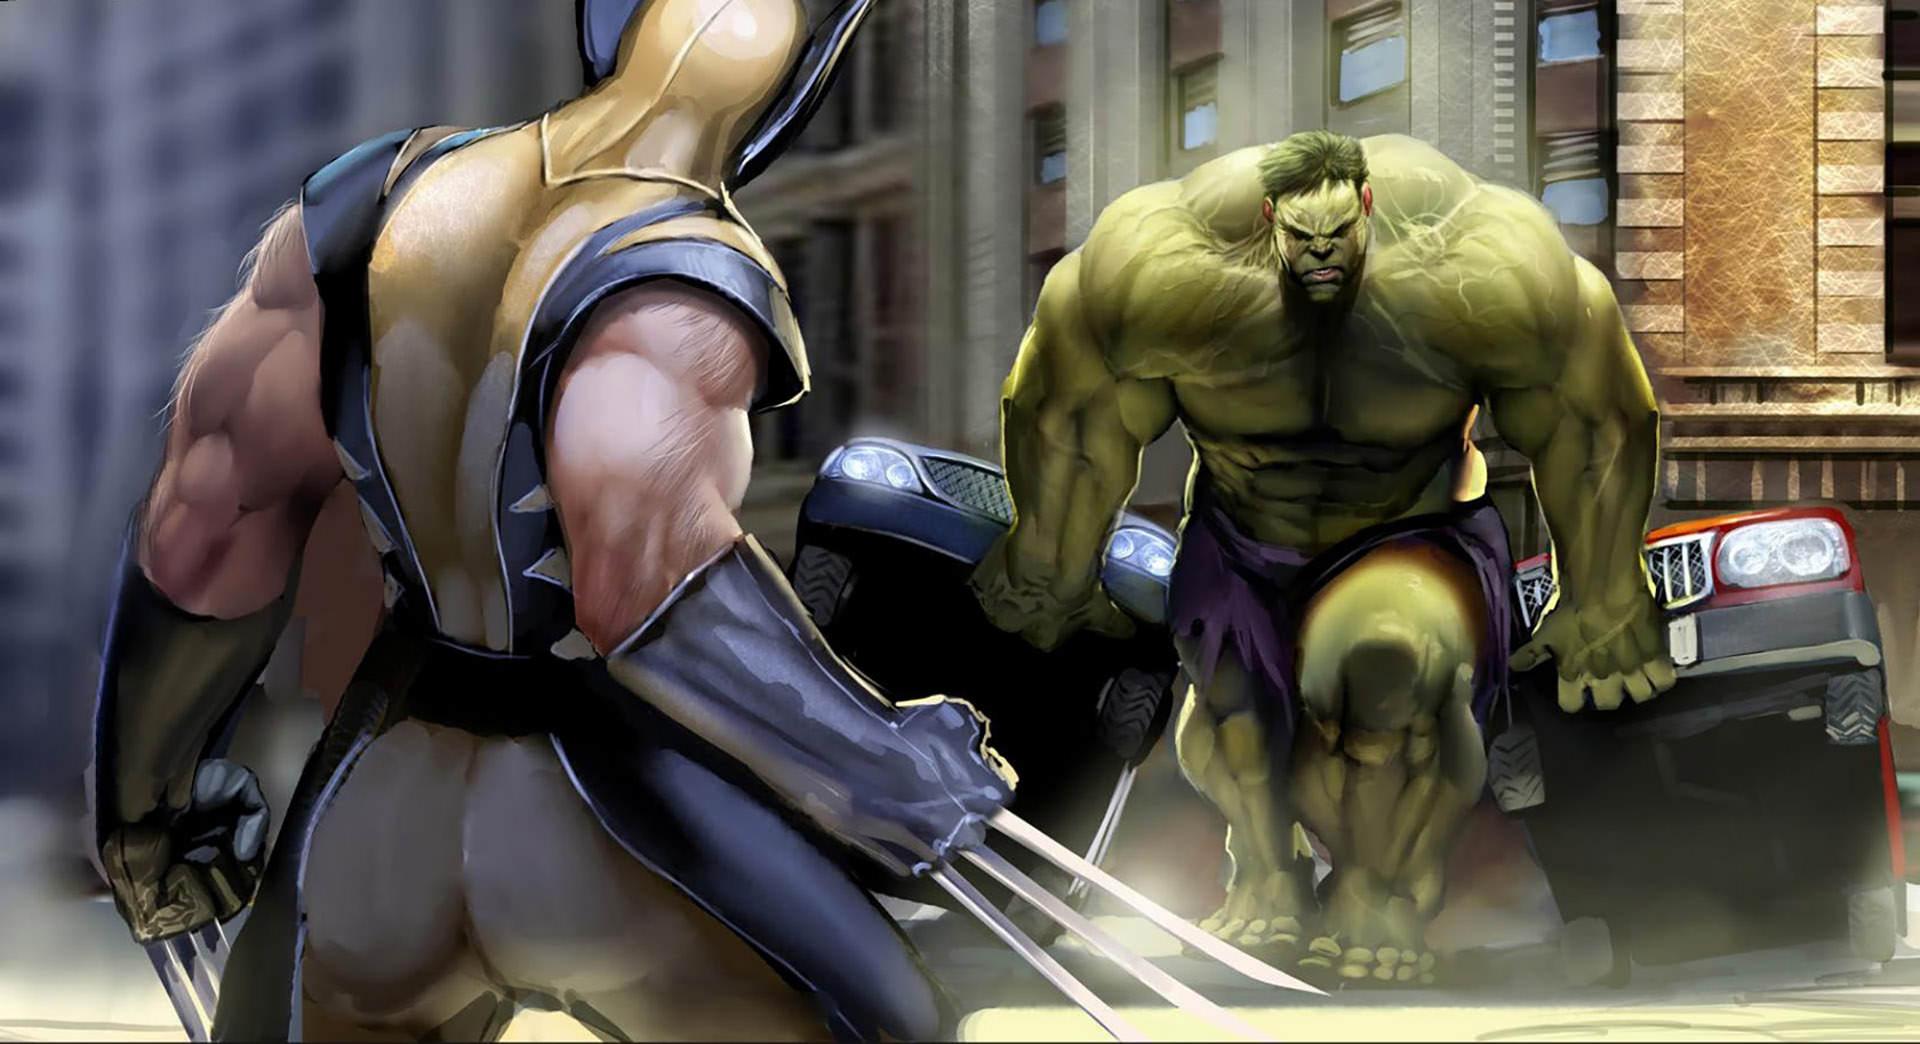 هالک - مارول کامیکس - اونجرز - avengers - hulk - marvel comics